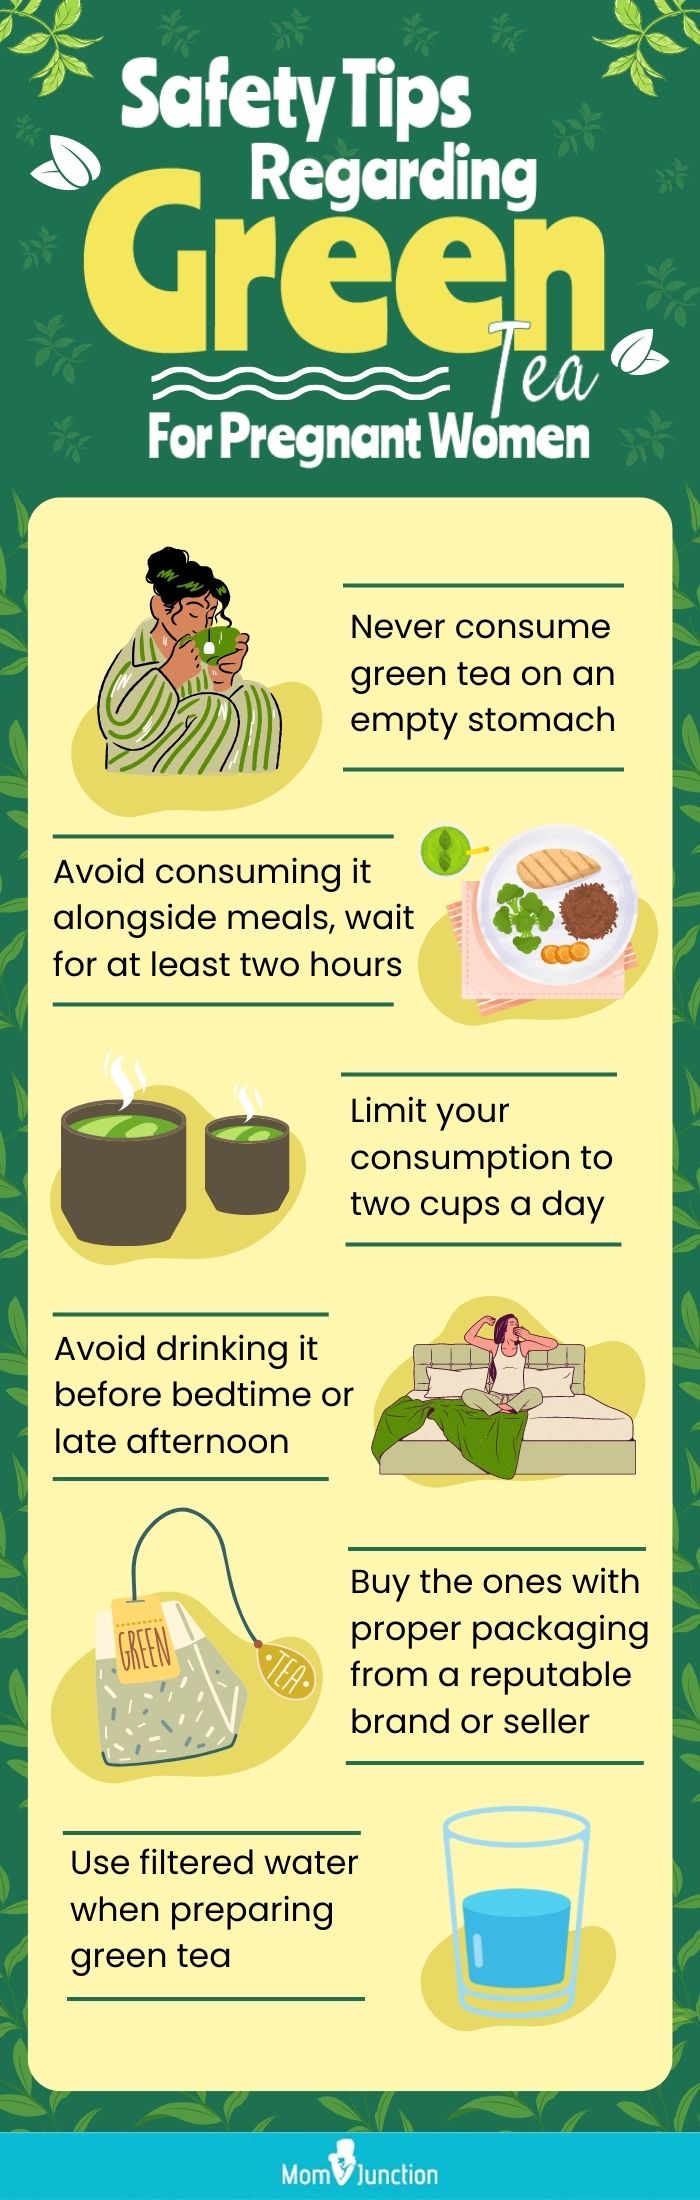 safety tips regarding green tea for pregnant women [infographic]